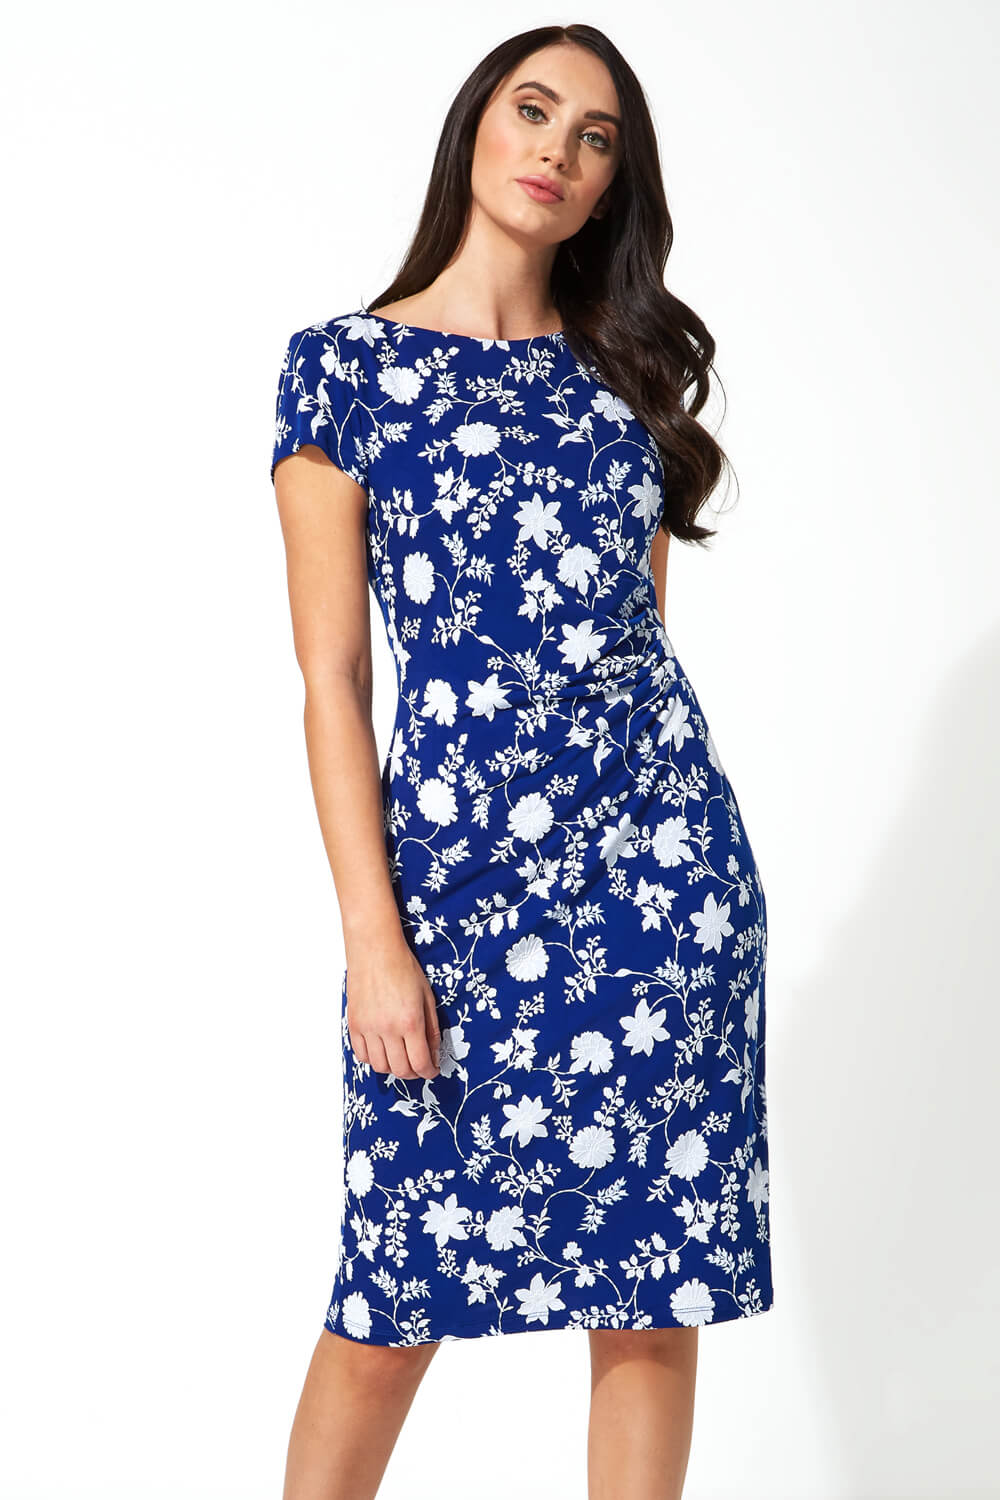 Floral Textured Print Side Ruched Dress in Royal Blue - Roman Originals UK